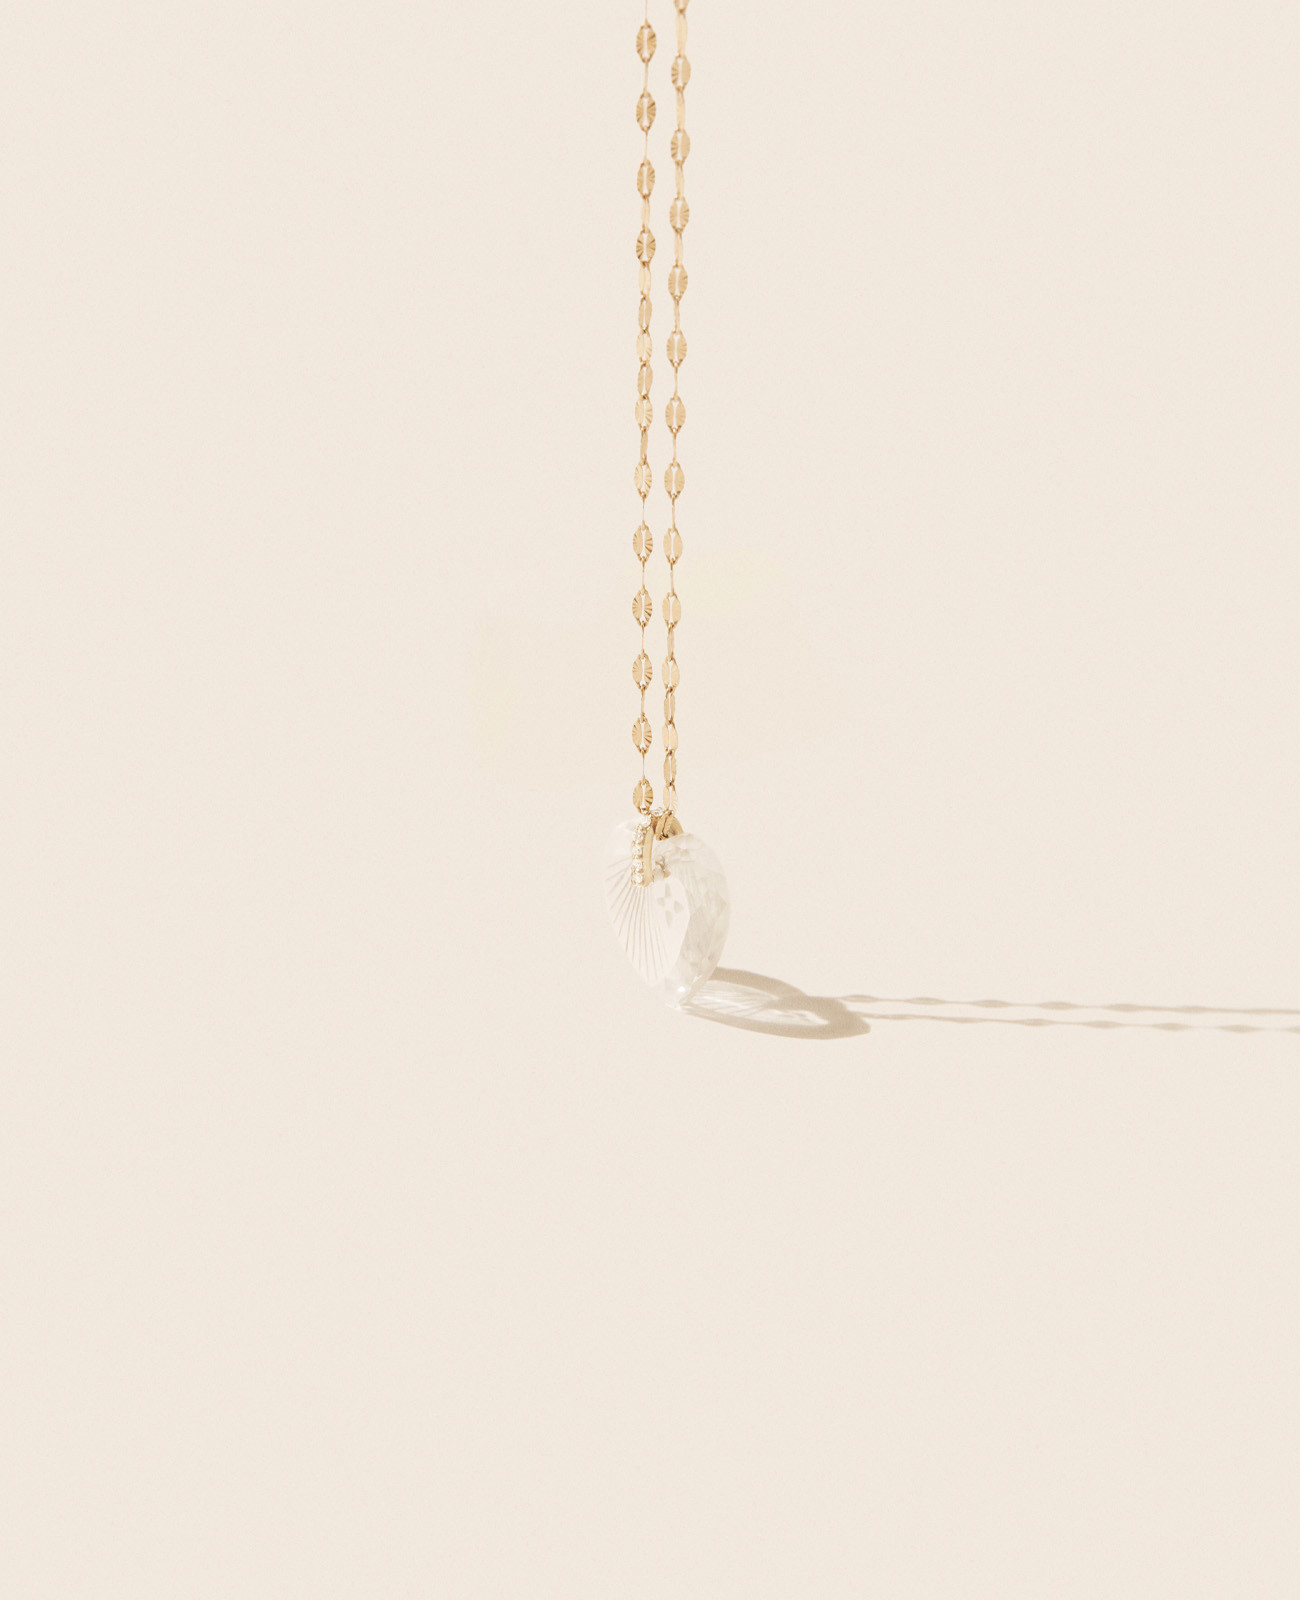 GABIN N°3 necklace pascale monvoisin jewelry paris